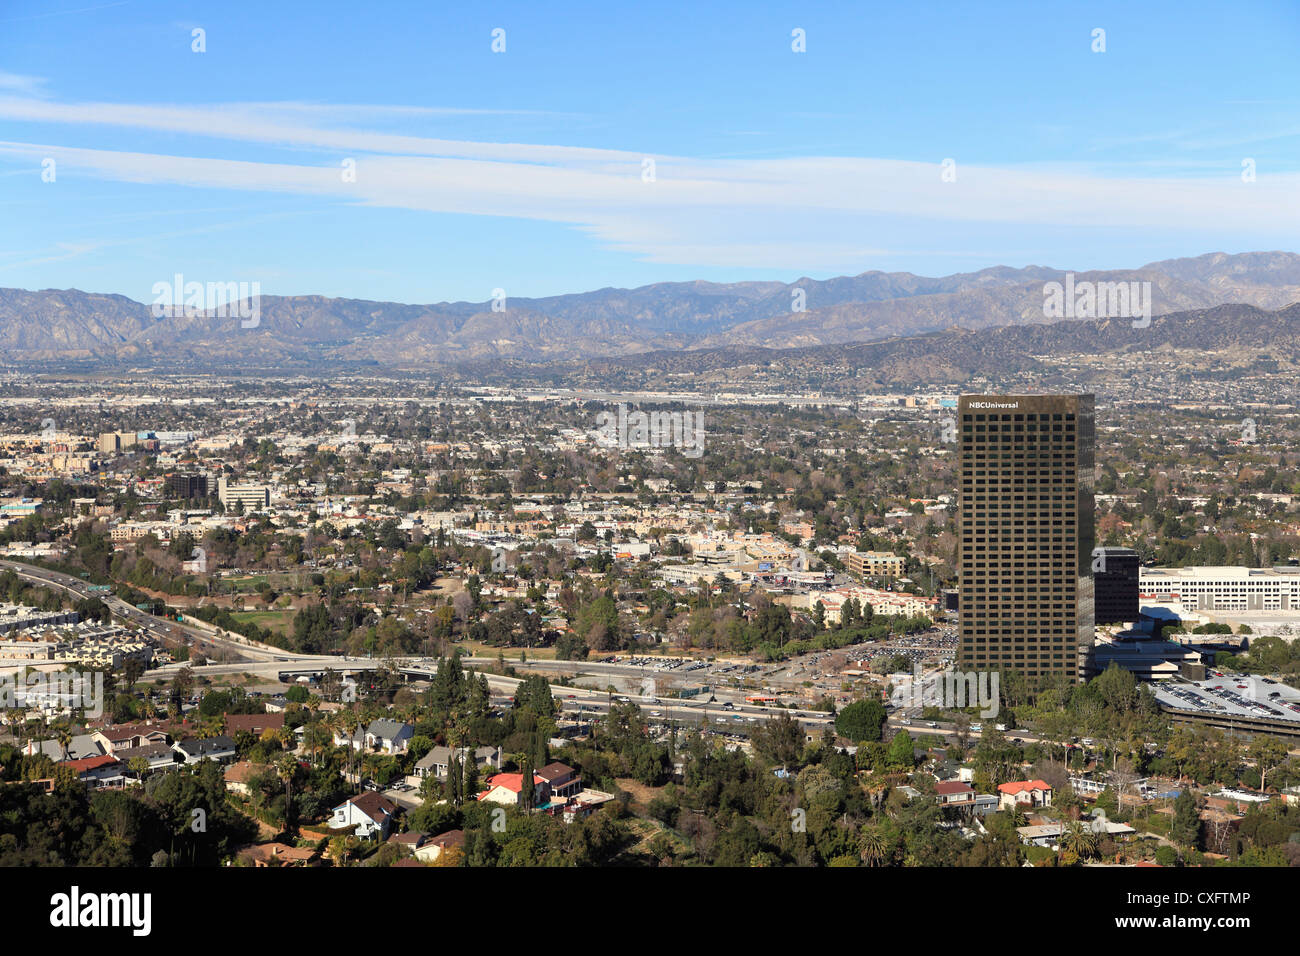 Valle di San Fernando, montagne di San Gabriel, Burbank, Los Angeles, California, Stati Uniti d'America Foto Stock